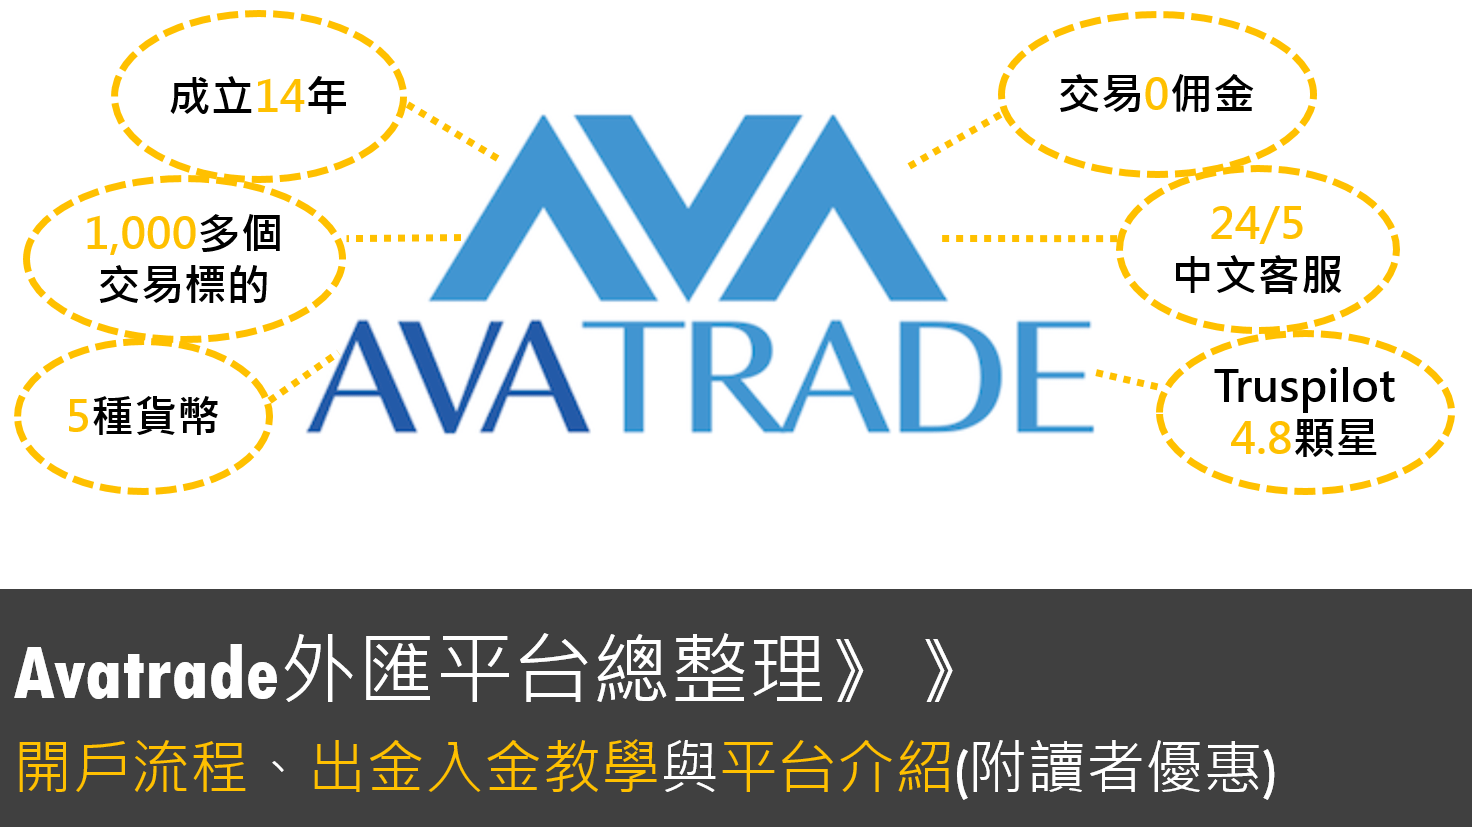 Avatrade介紹